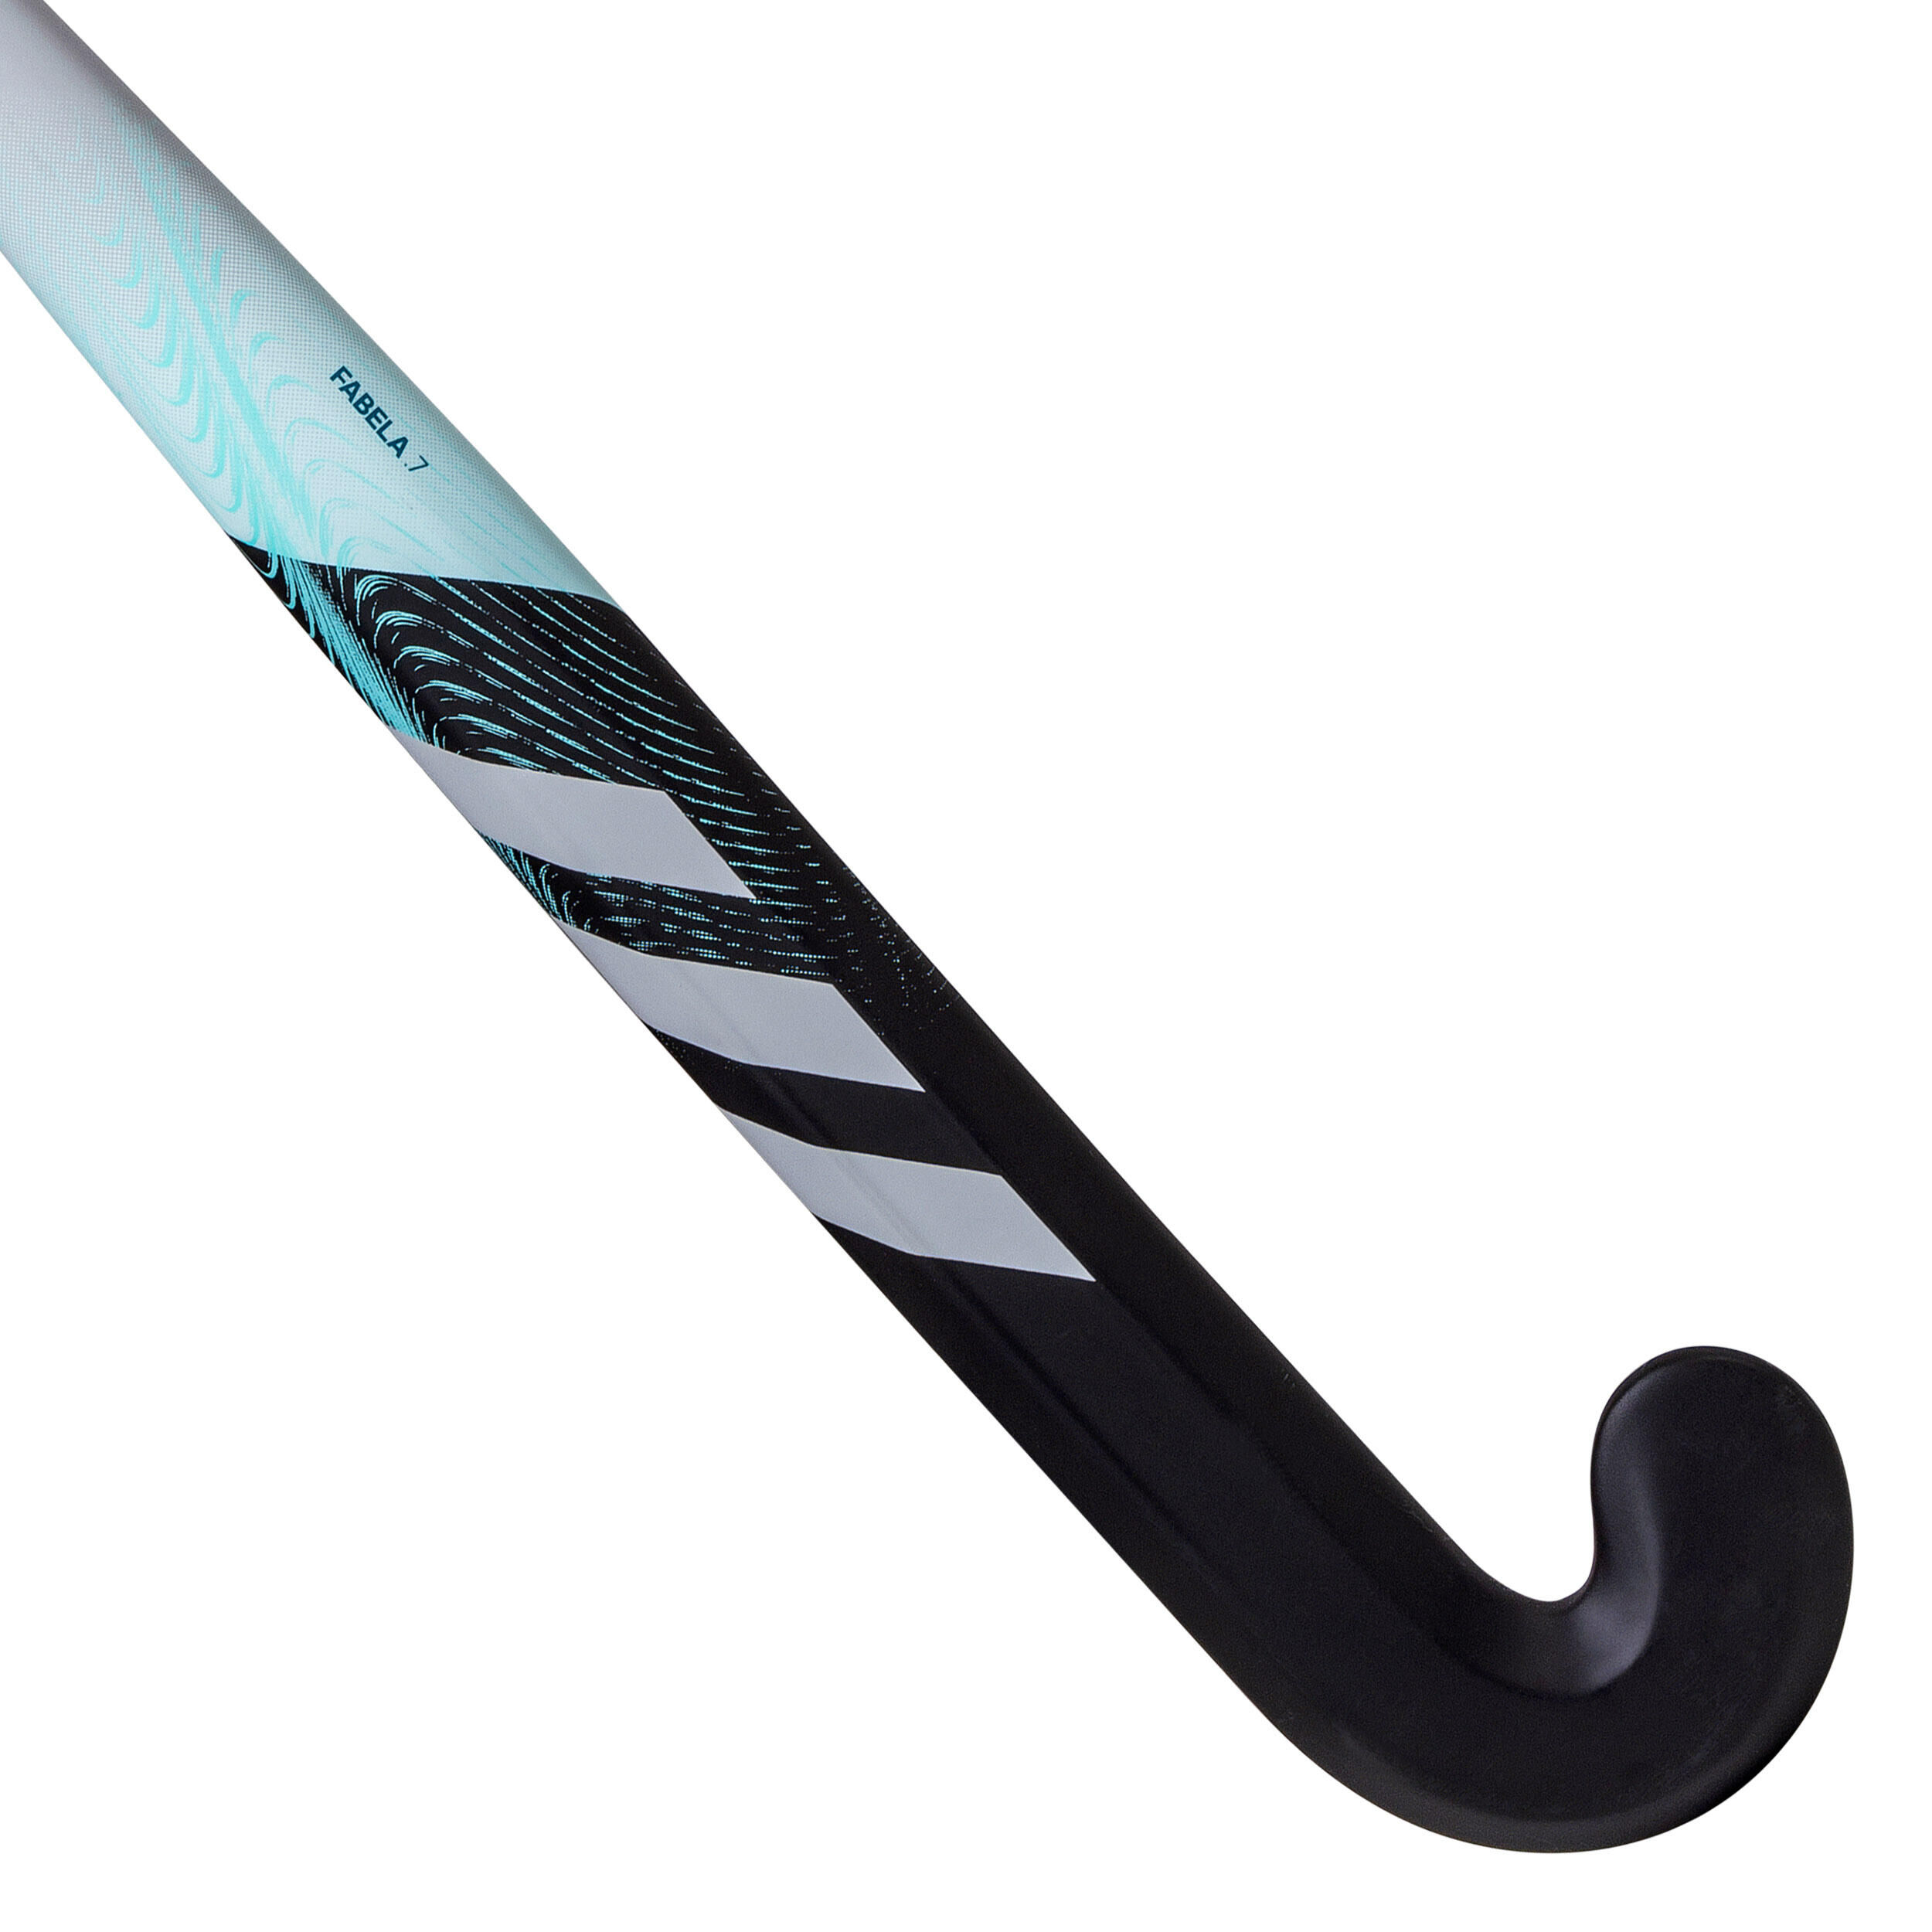 ADIDAS Adult Intermediate 20% Carbon Mid Bow Field Hockey Stick Fabela .7 - Black/Turquoise